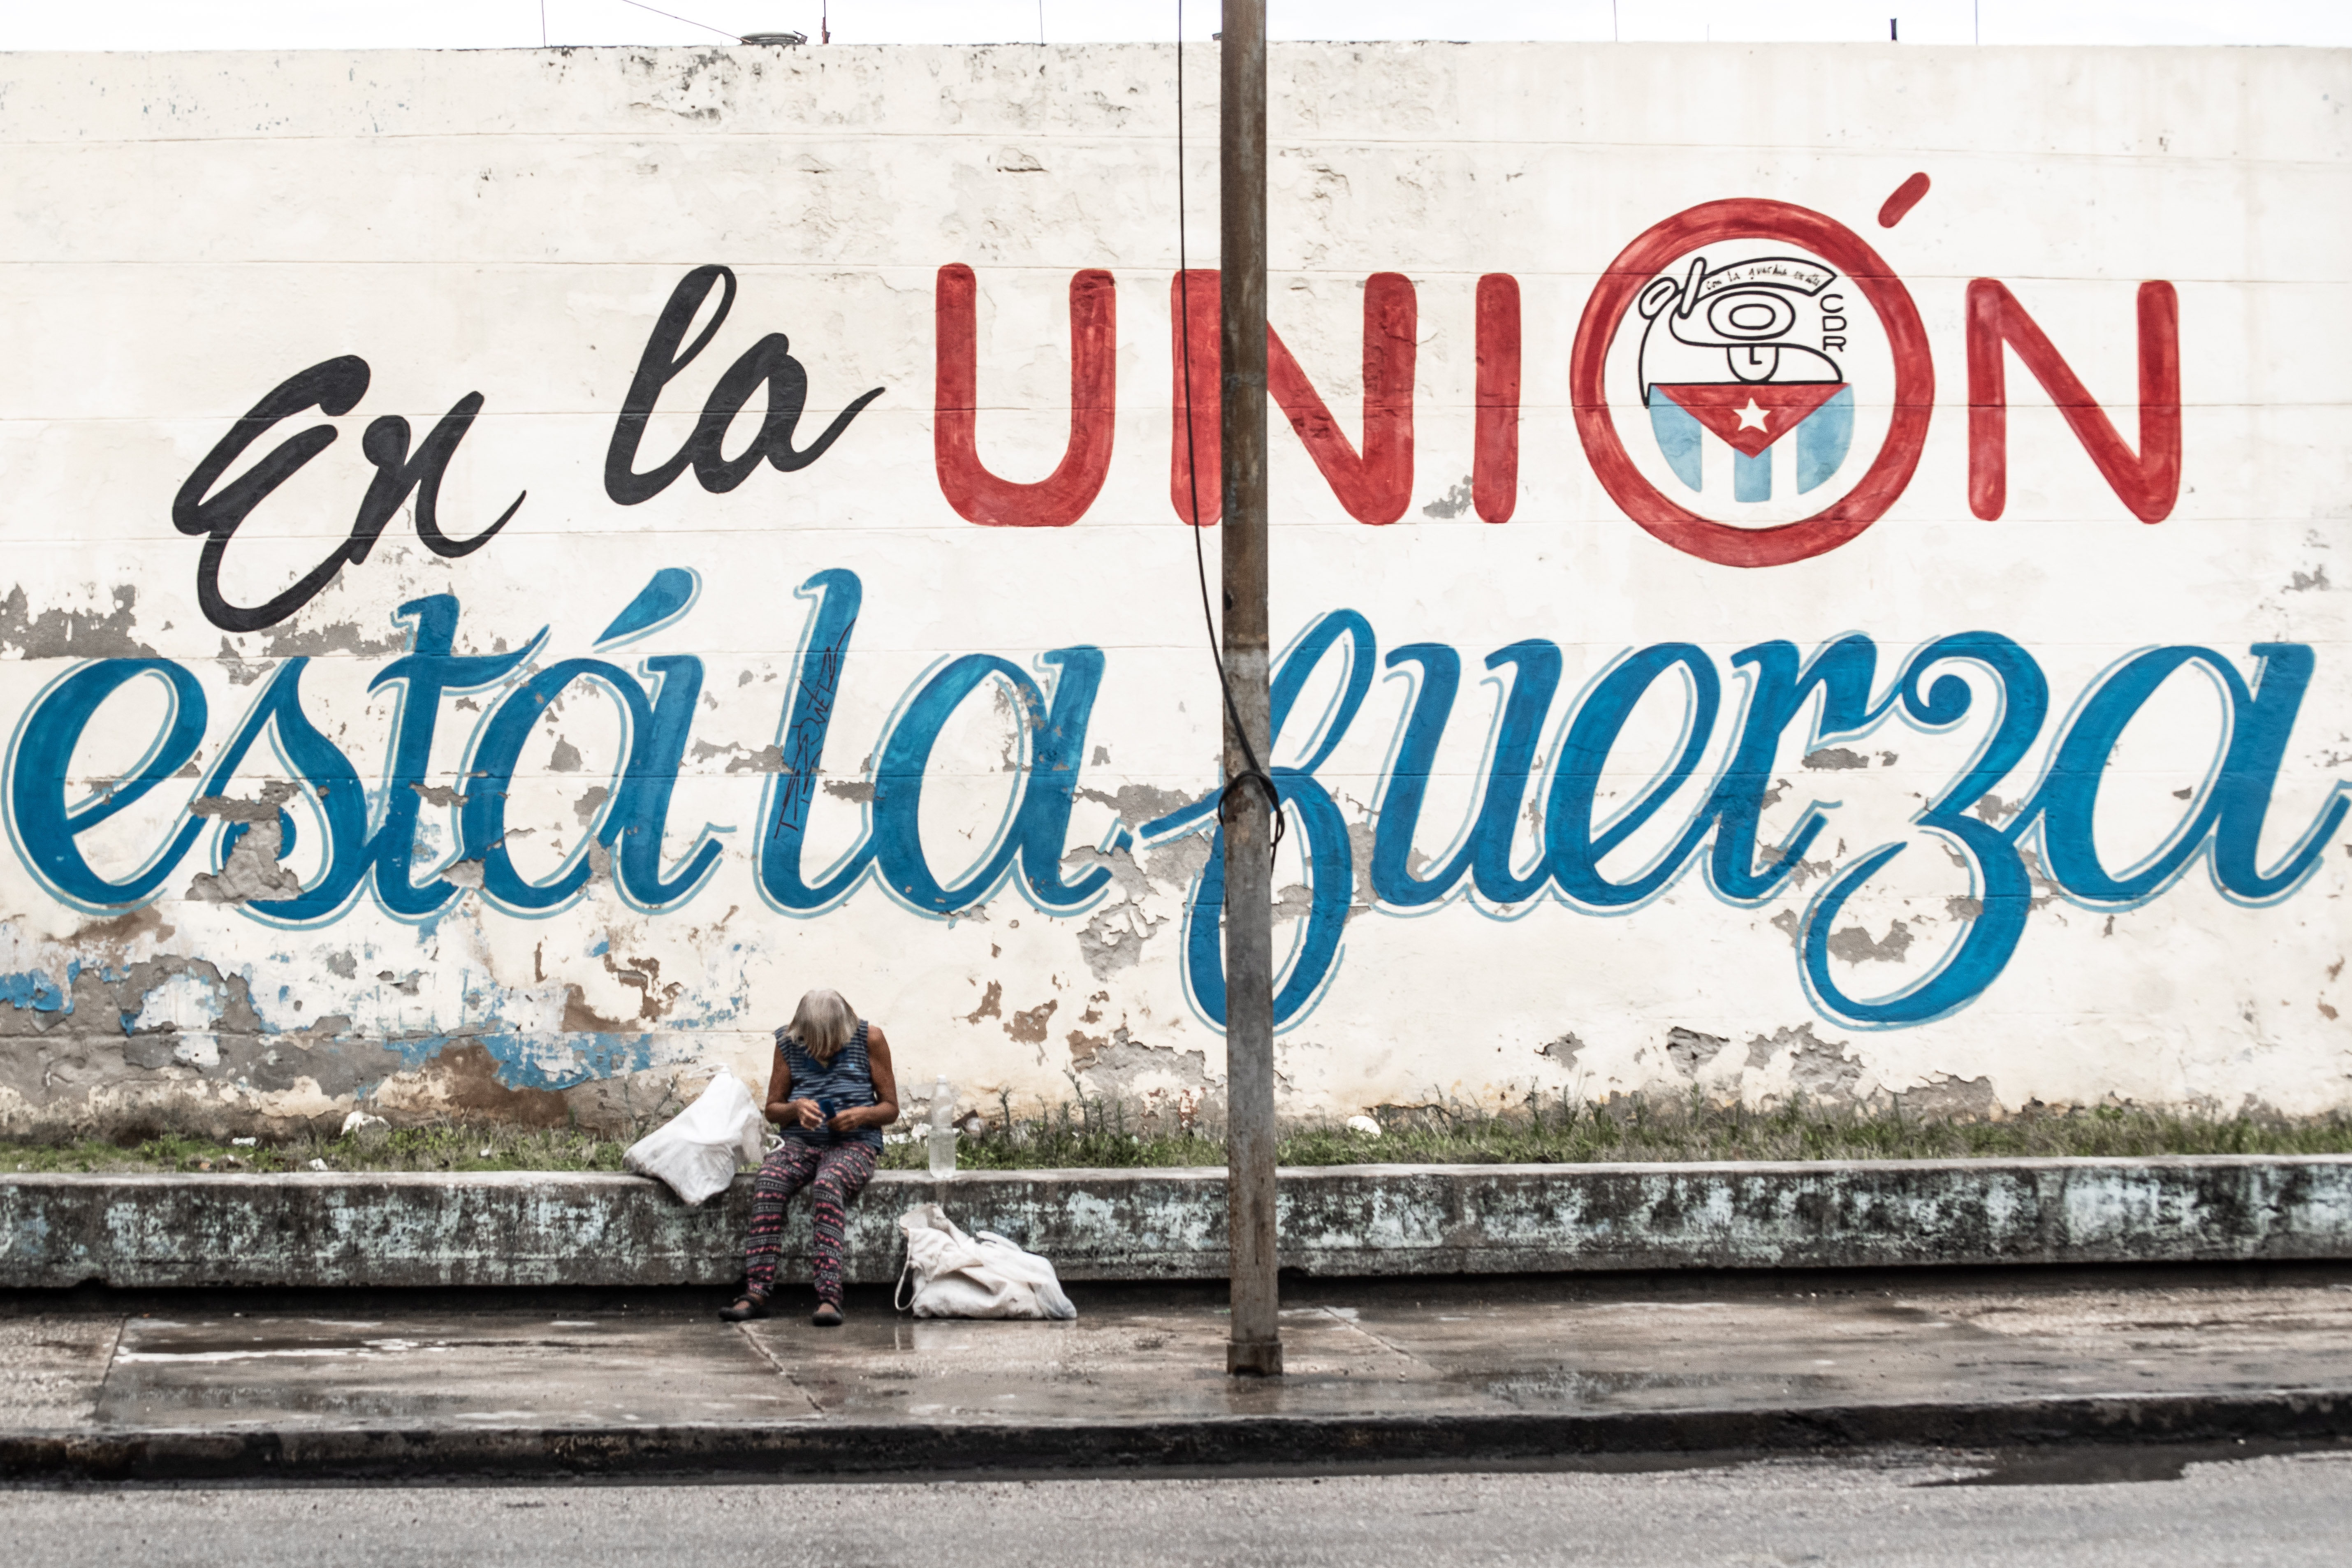 LASA apoya el régimen dictatorial cubano